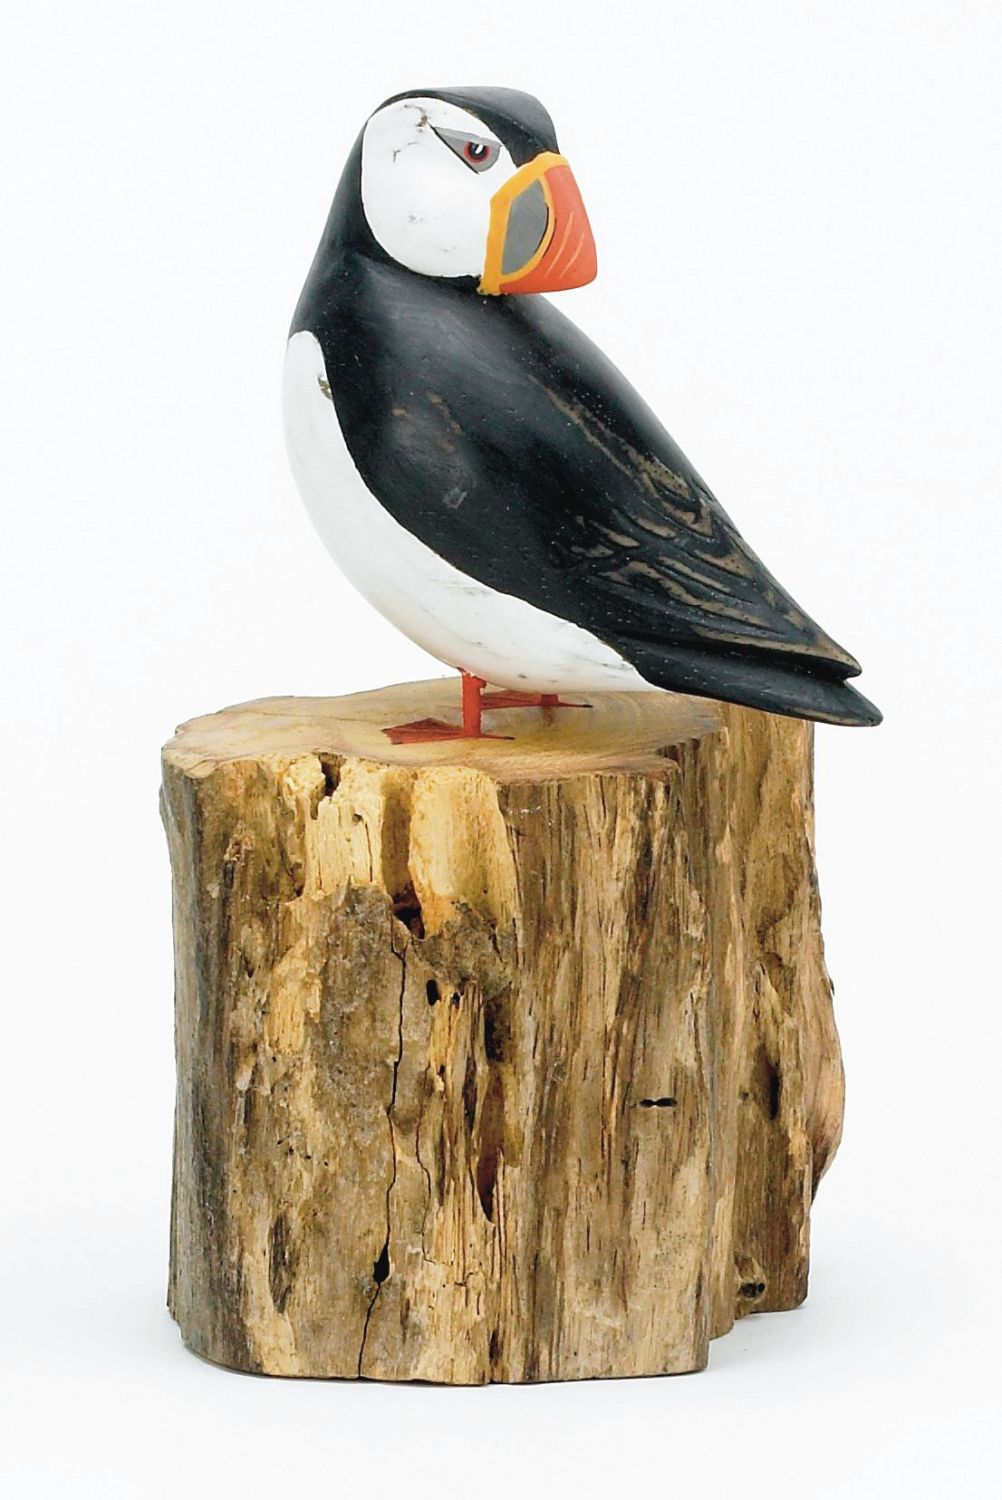 Archipelago Puffin Preening Small Bird Wood Carving